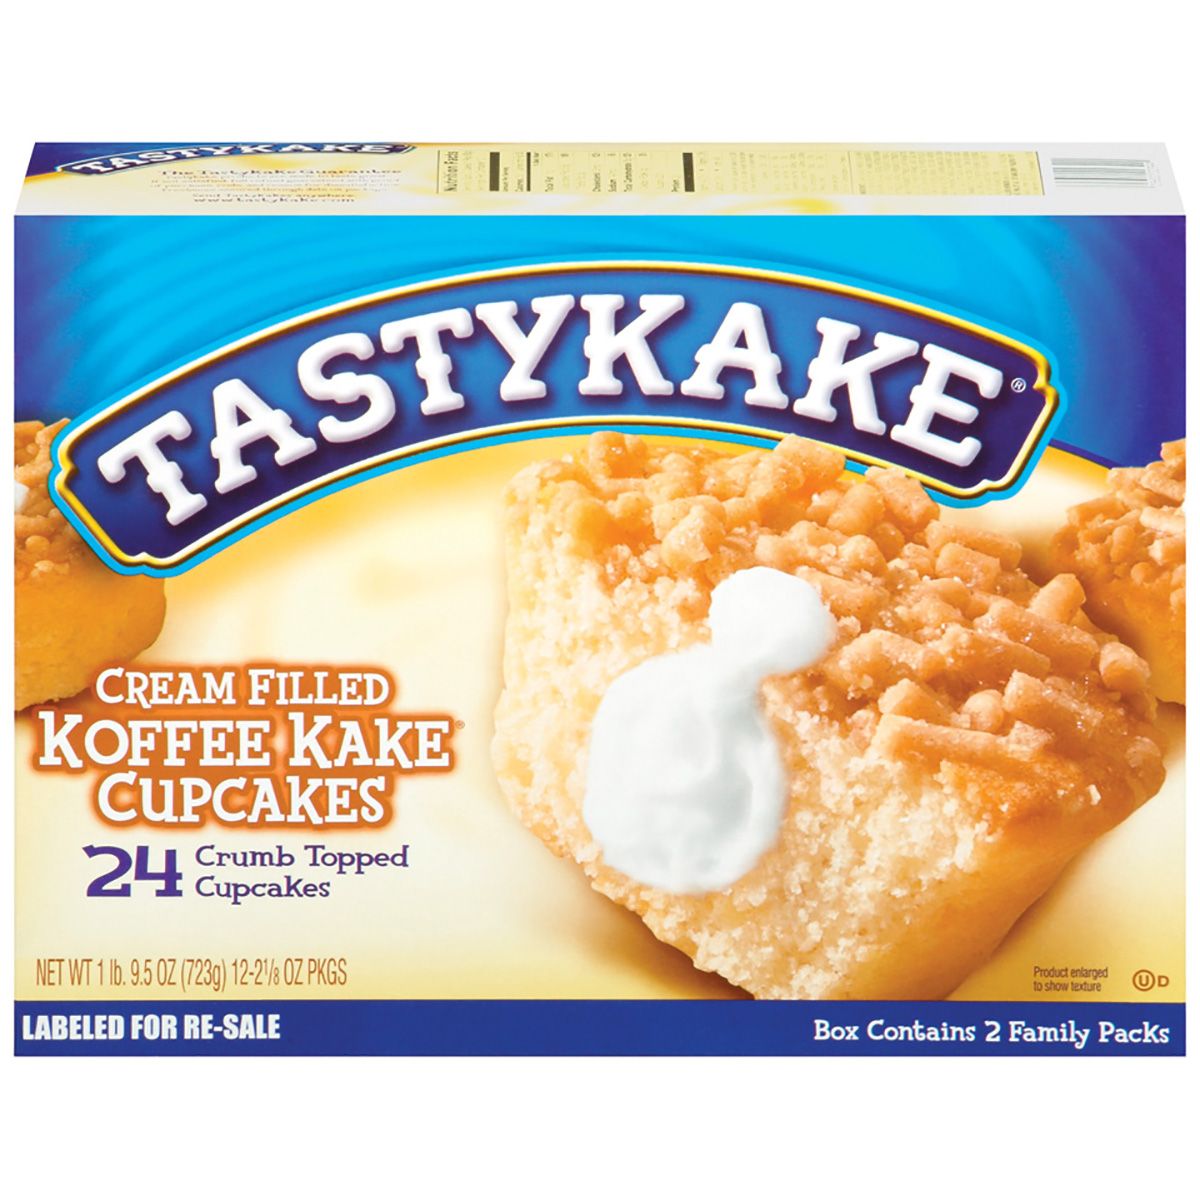 Tastykake Cream Filled Koffee Kake Cupcake, 24 ct./1.02 oz.